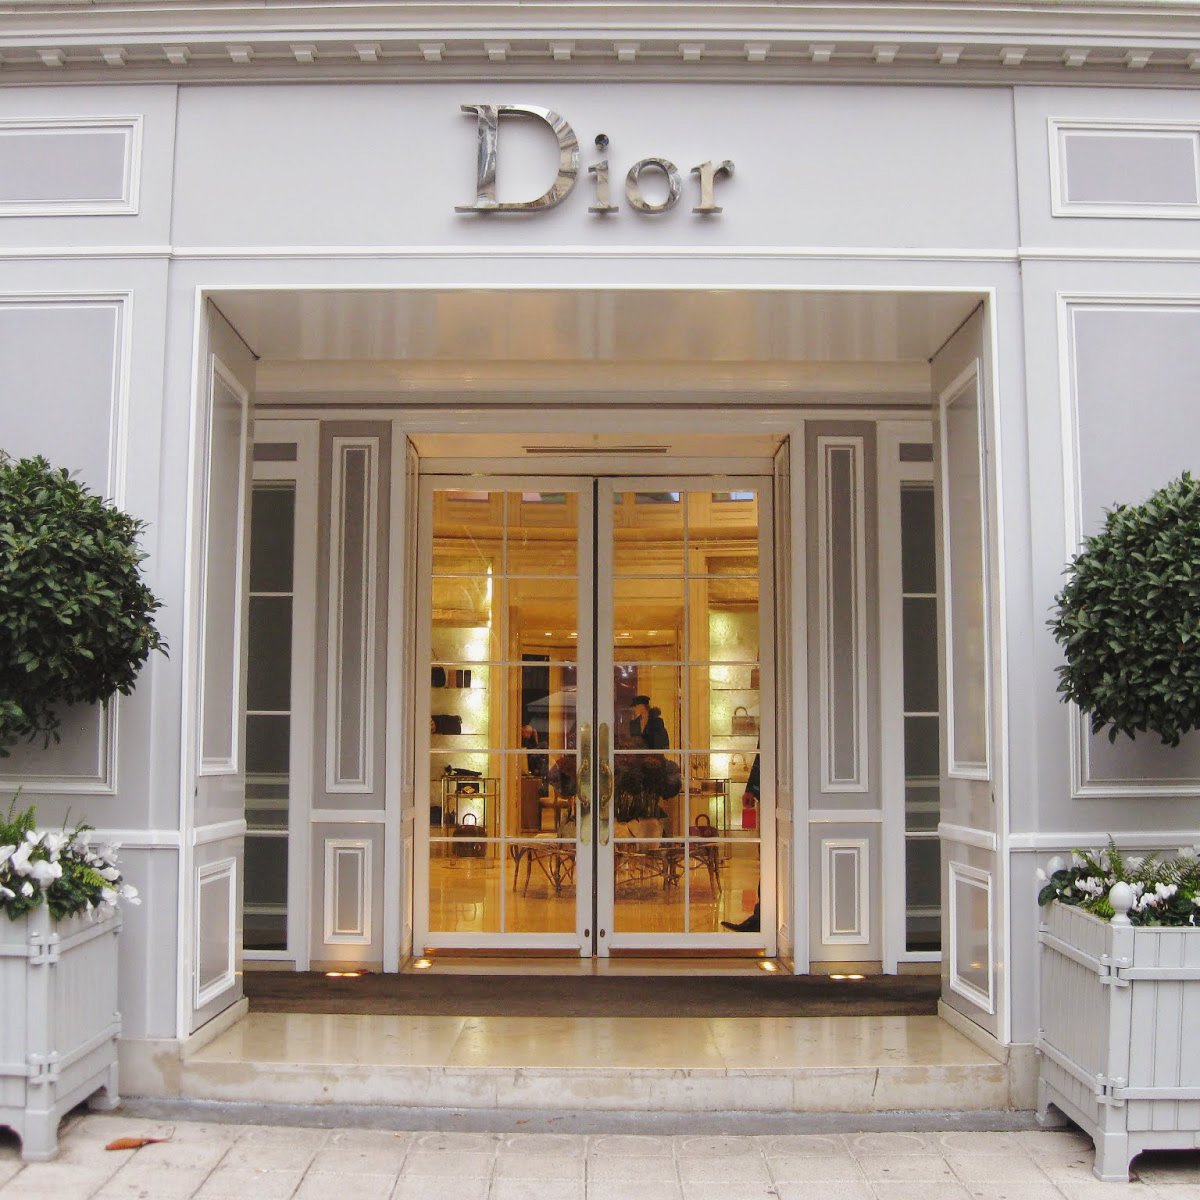 Décor | Colour Inspiration: Decorating with Dior Grey